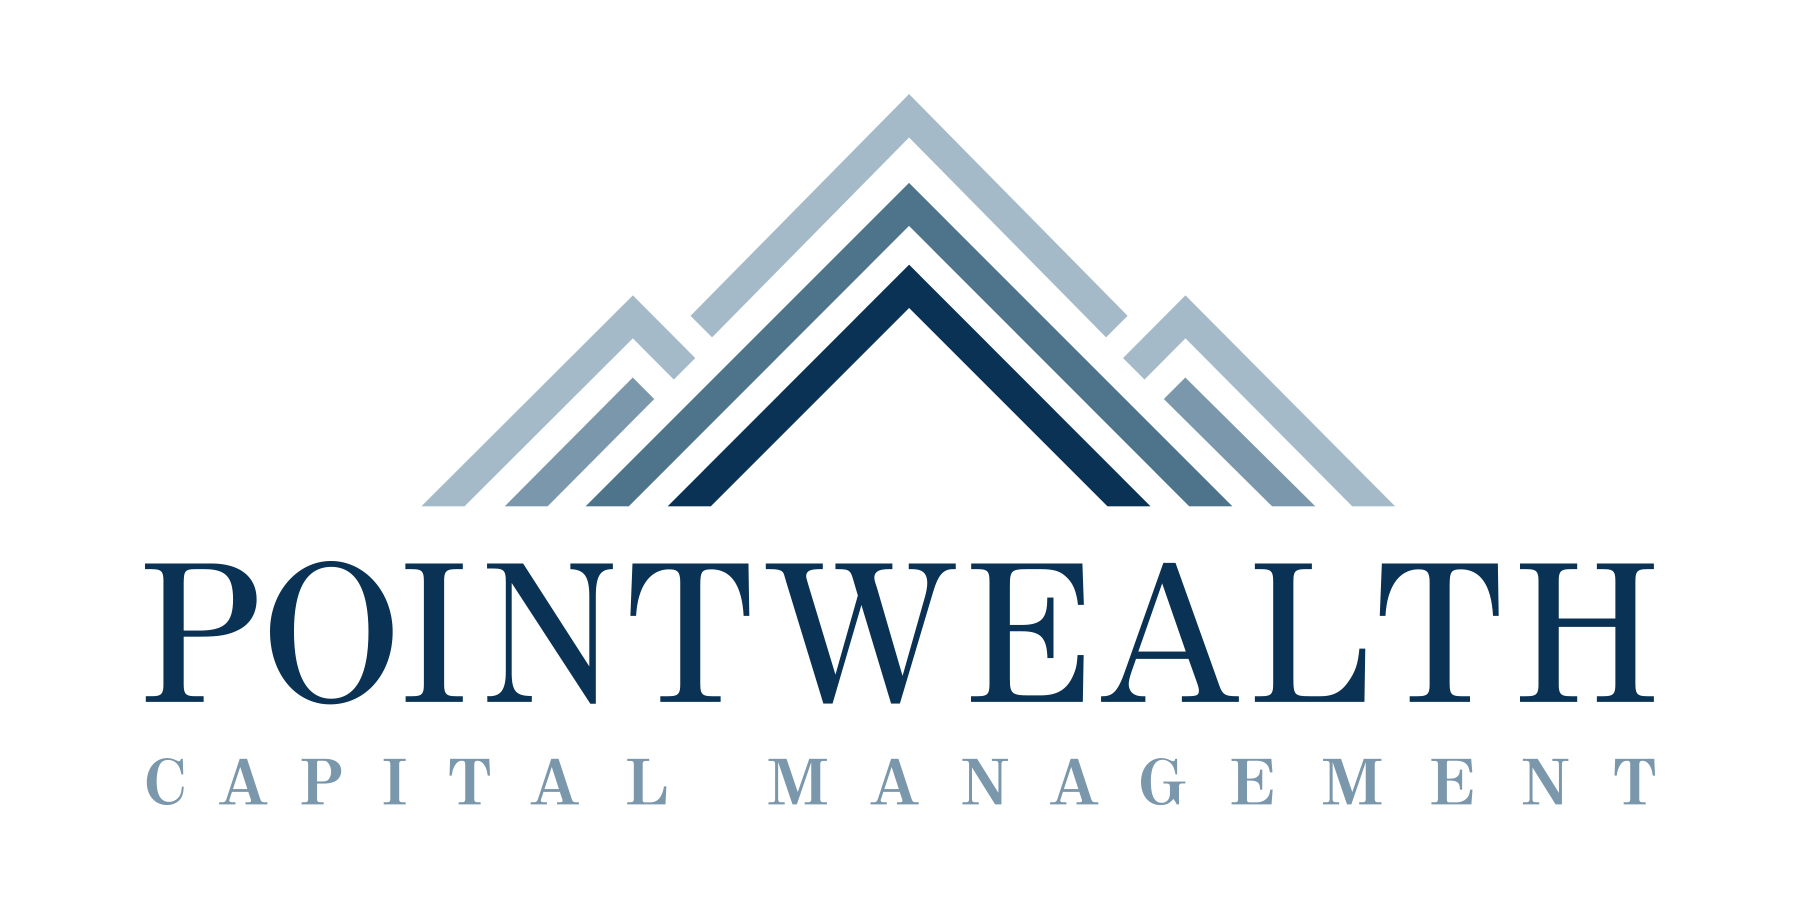 Pointwealth Capital Management